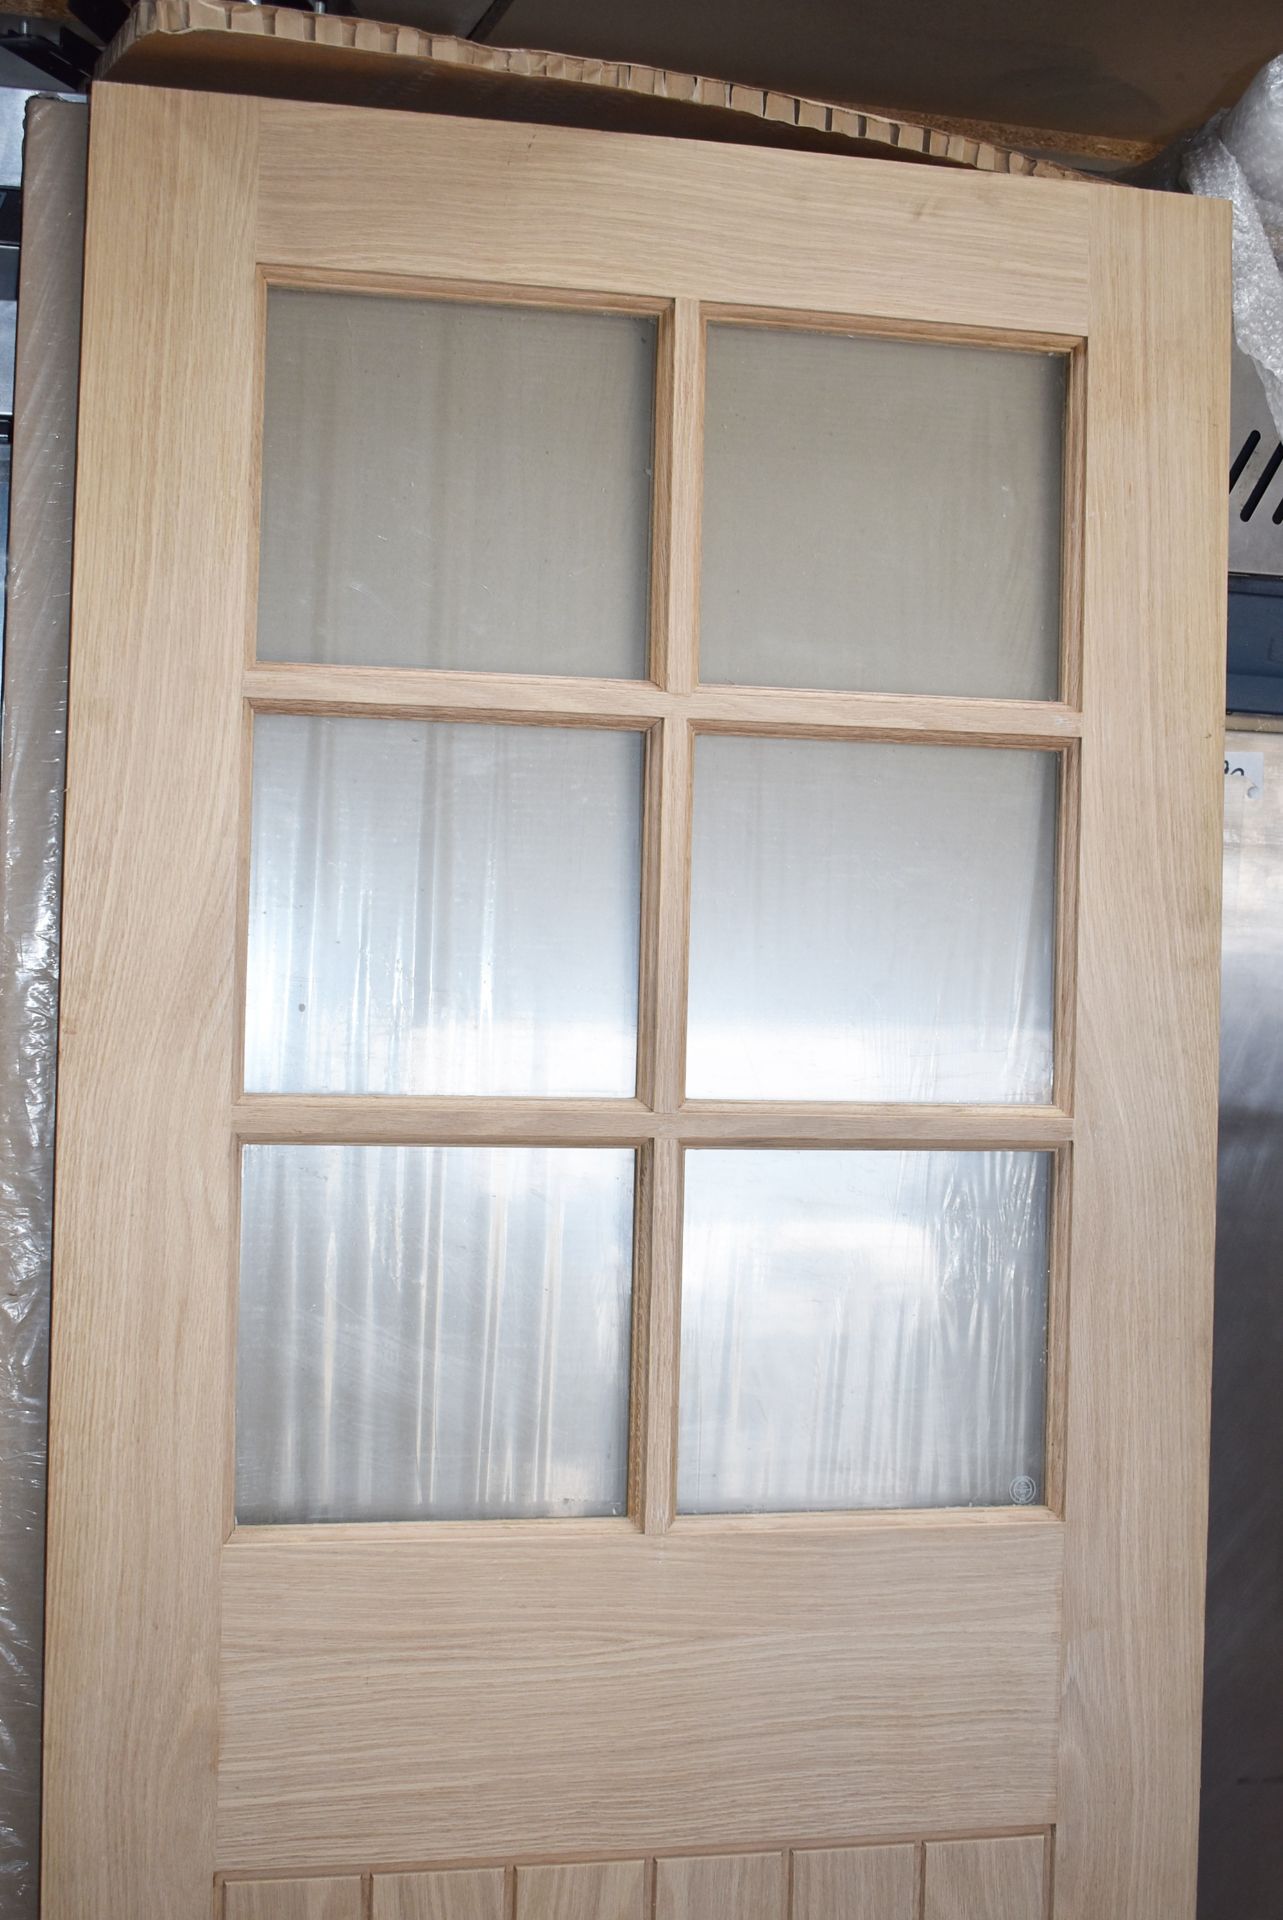 1 x Solid Oak Suffolk Internal FD30 Fire Door by XL Joinery - Unused - Size: 198x84x4.5 cms - - Image 3 of 6